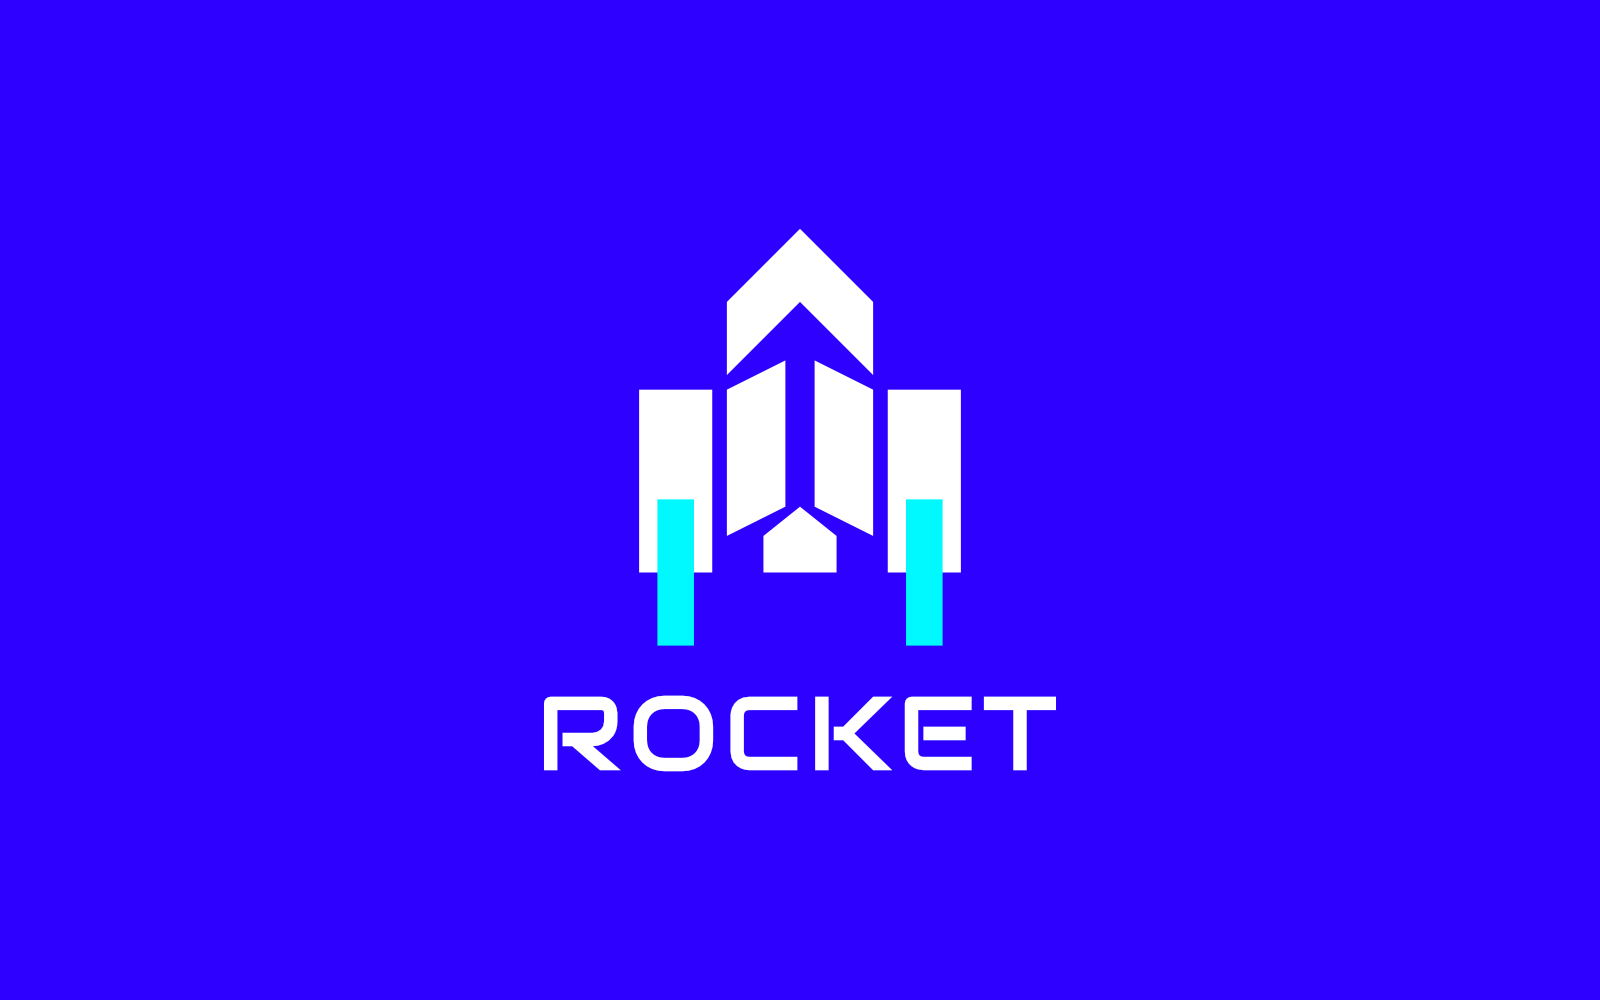 Rocket - Up Arrow Rocket Logo